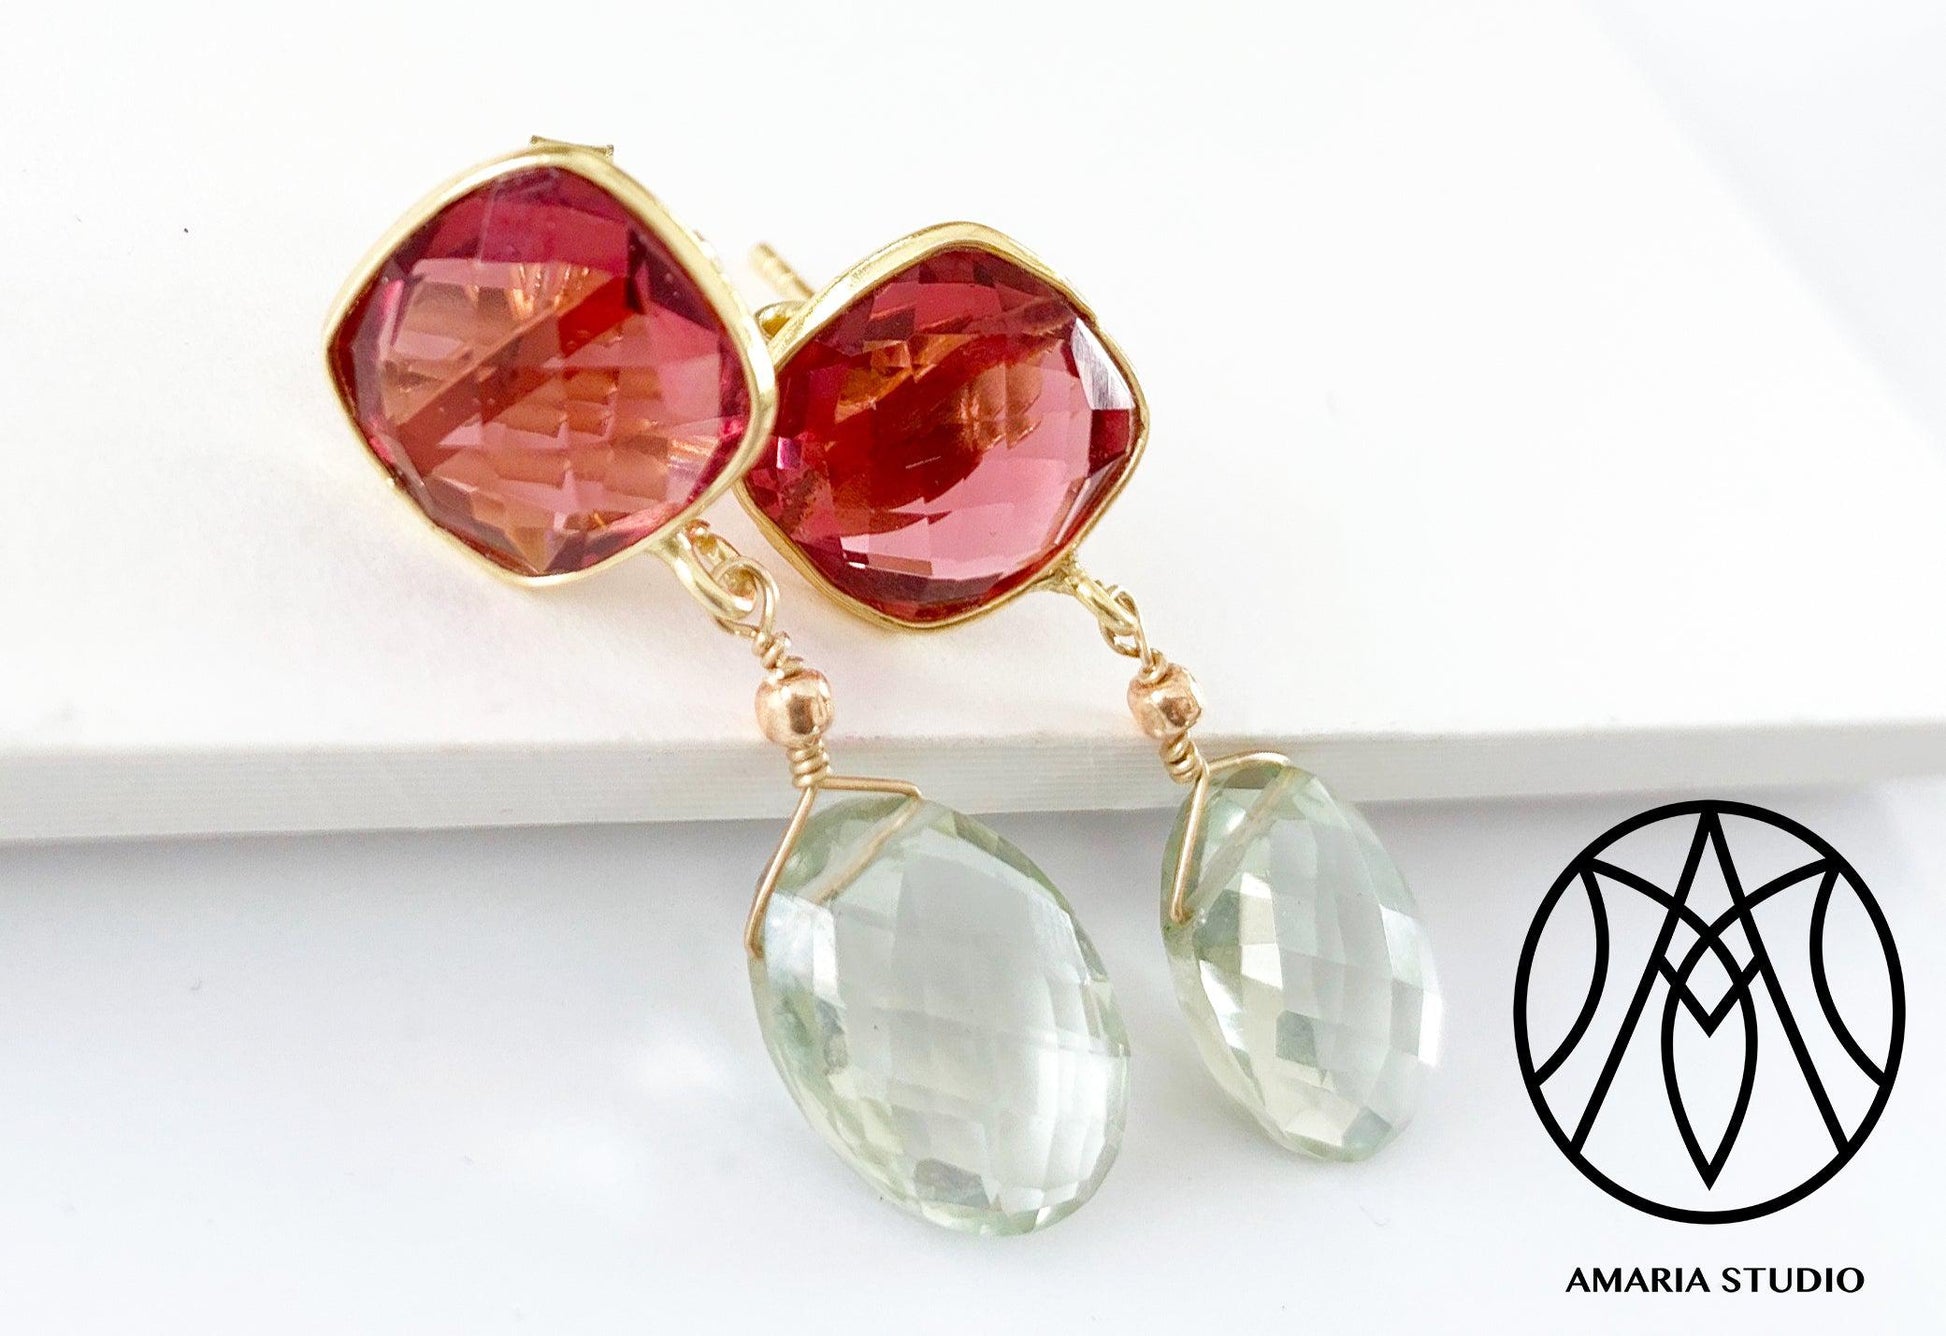 Pink tourmaline and green amethyst earrings - Amaria Studio